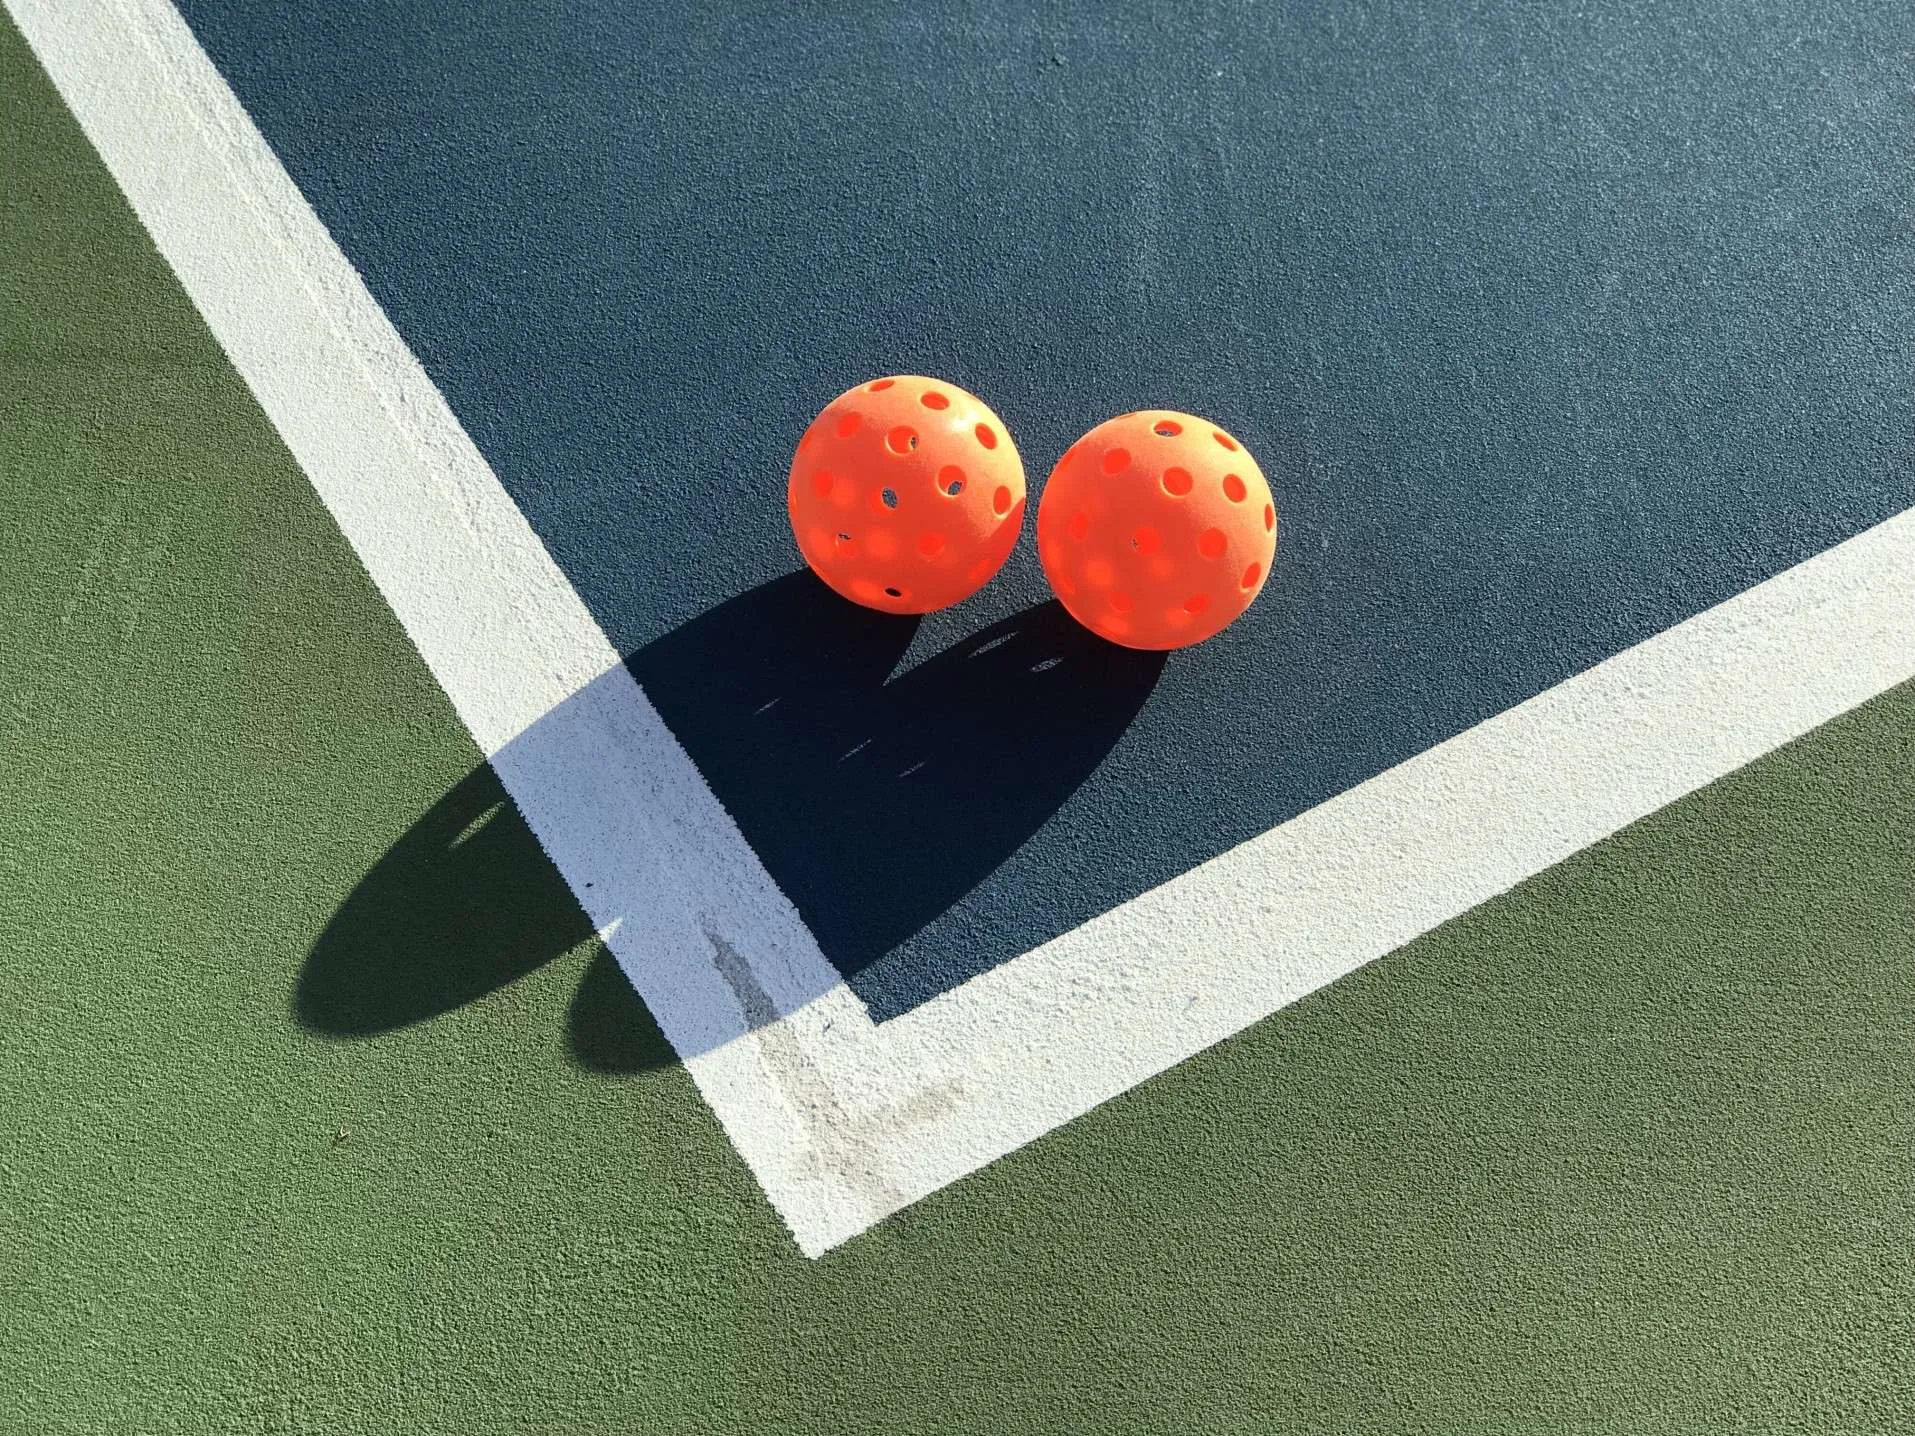 Two pickleball balls on court